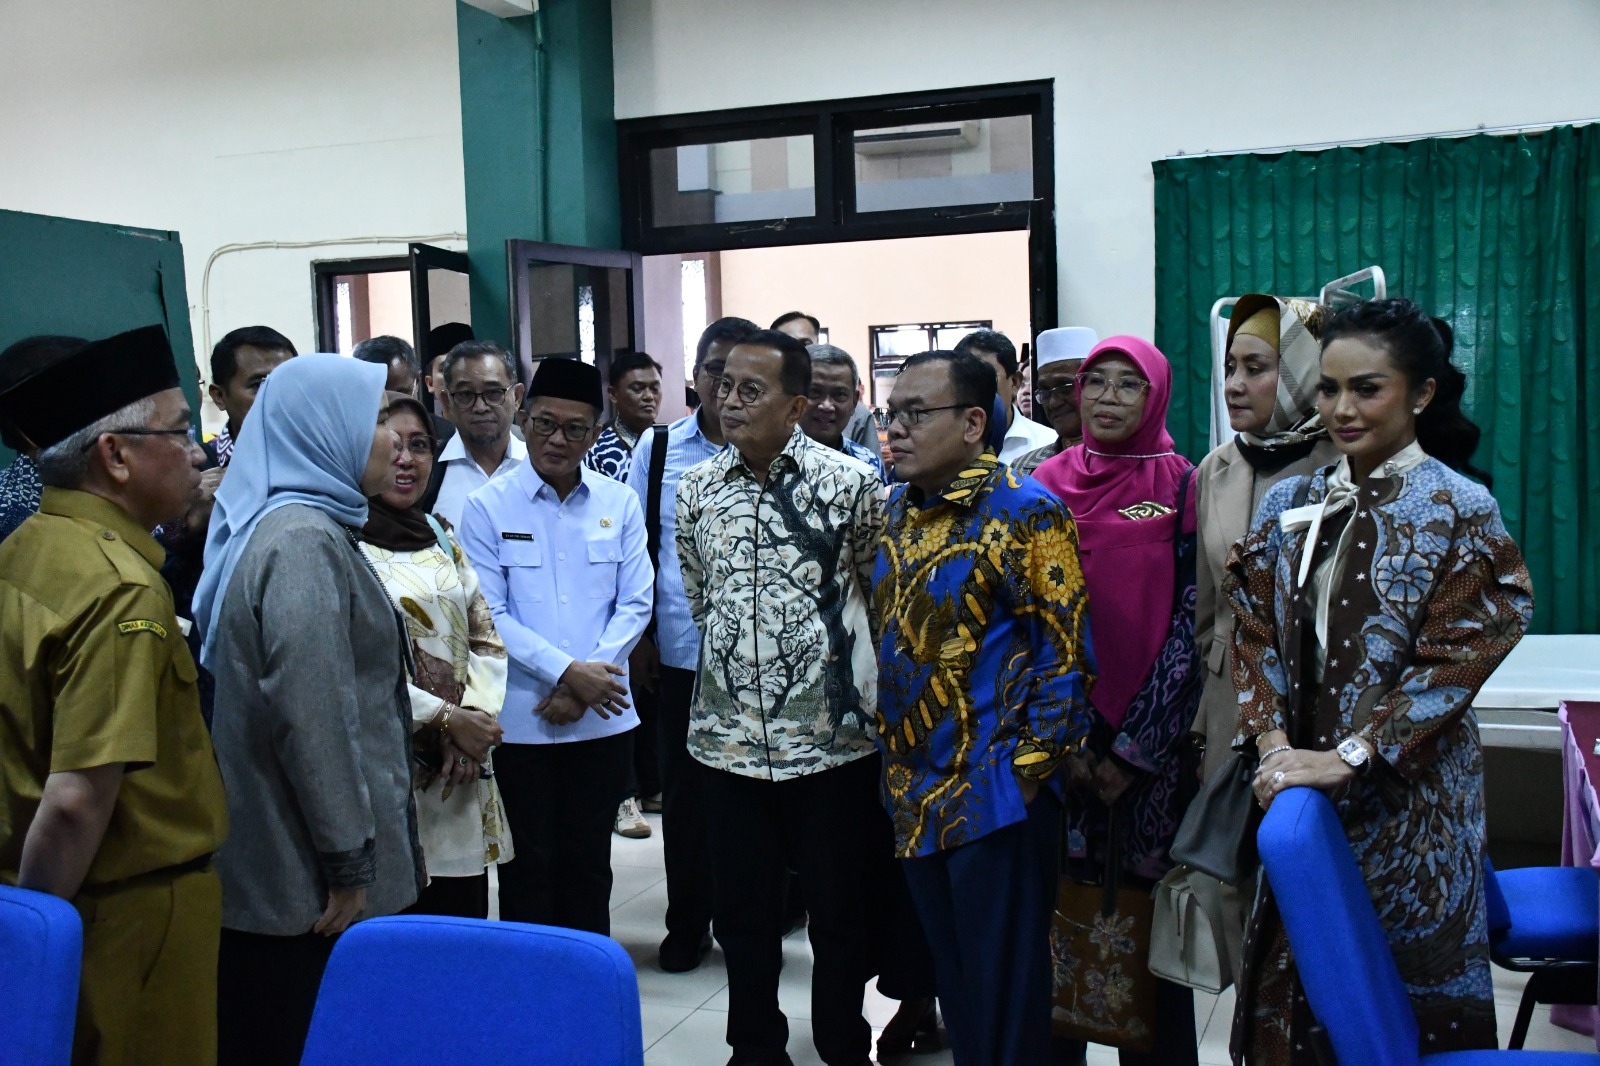 Jumlah Jemaah Haji Risti di Embarkasi Palembang Tinggi, Krisdayanti Bersama Komisi IX Apresiasi Layanan